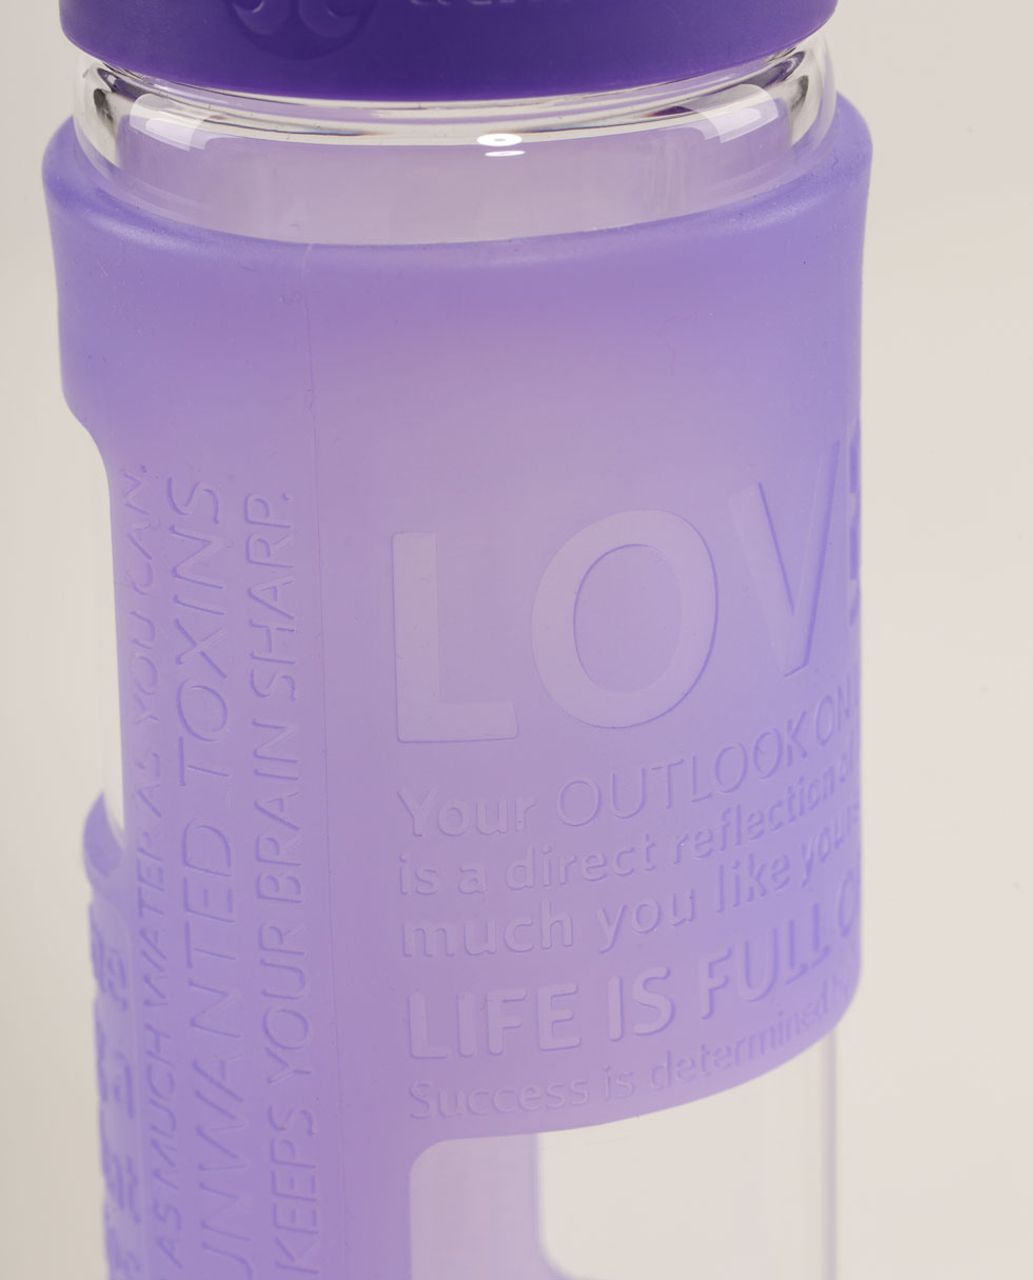 My first water bottle from Lululemon 🍋 SeaWheeze Back to Life Sport Bottle  24oz in Raspberry Glo Light/Highlight Purple 💜 such beautiful colours! : r/ lululemon